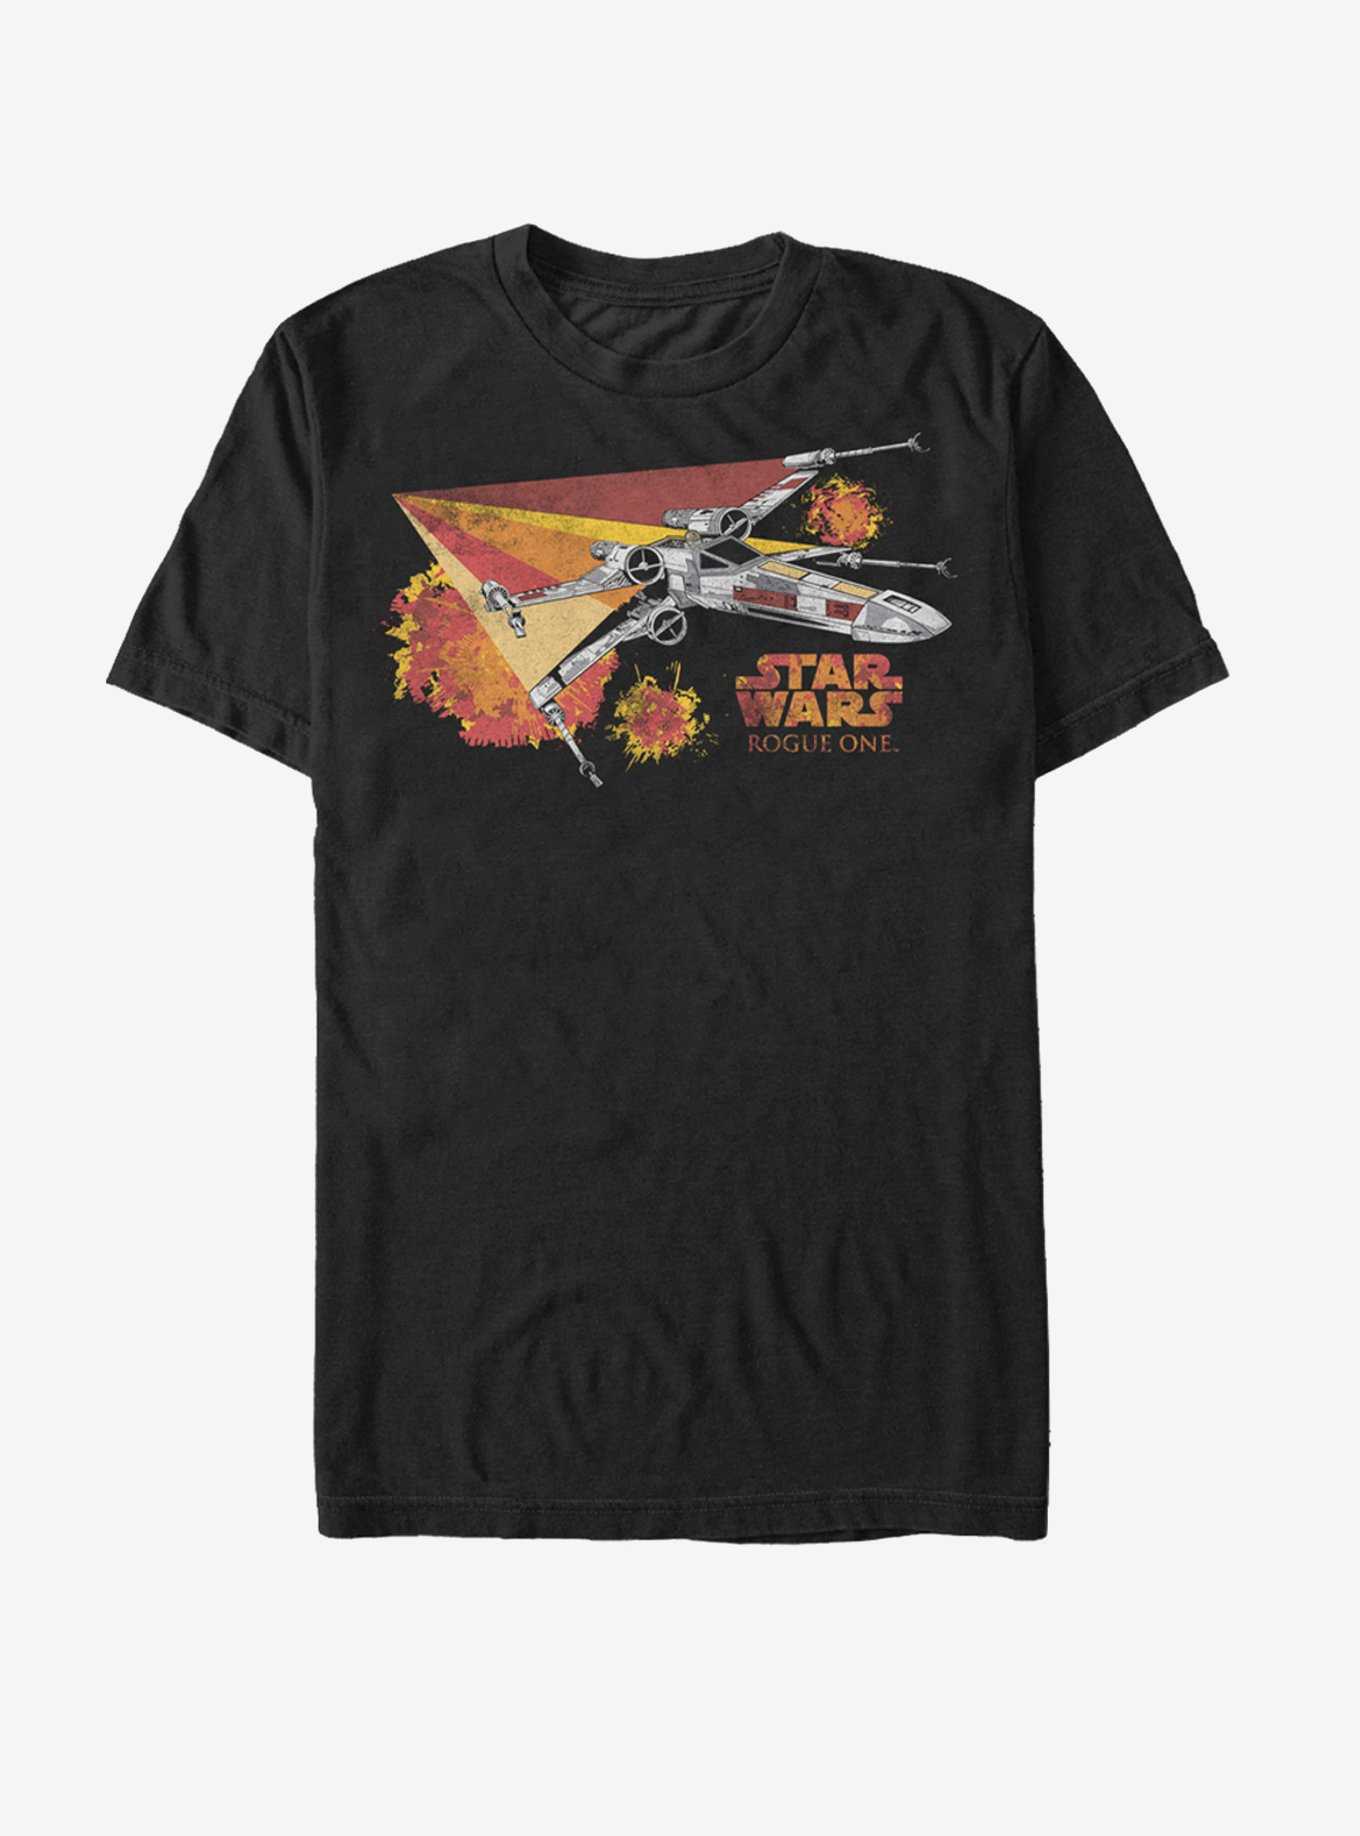 Star Wars X-Wing Fire Bursts T-Shirt, , hi-res